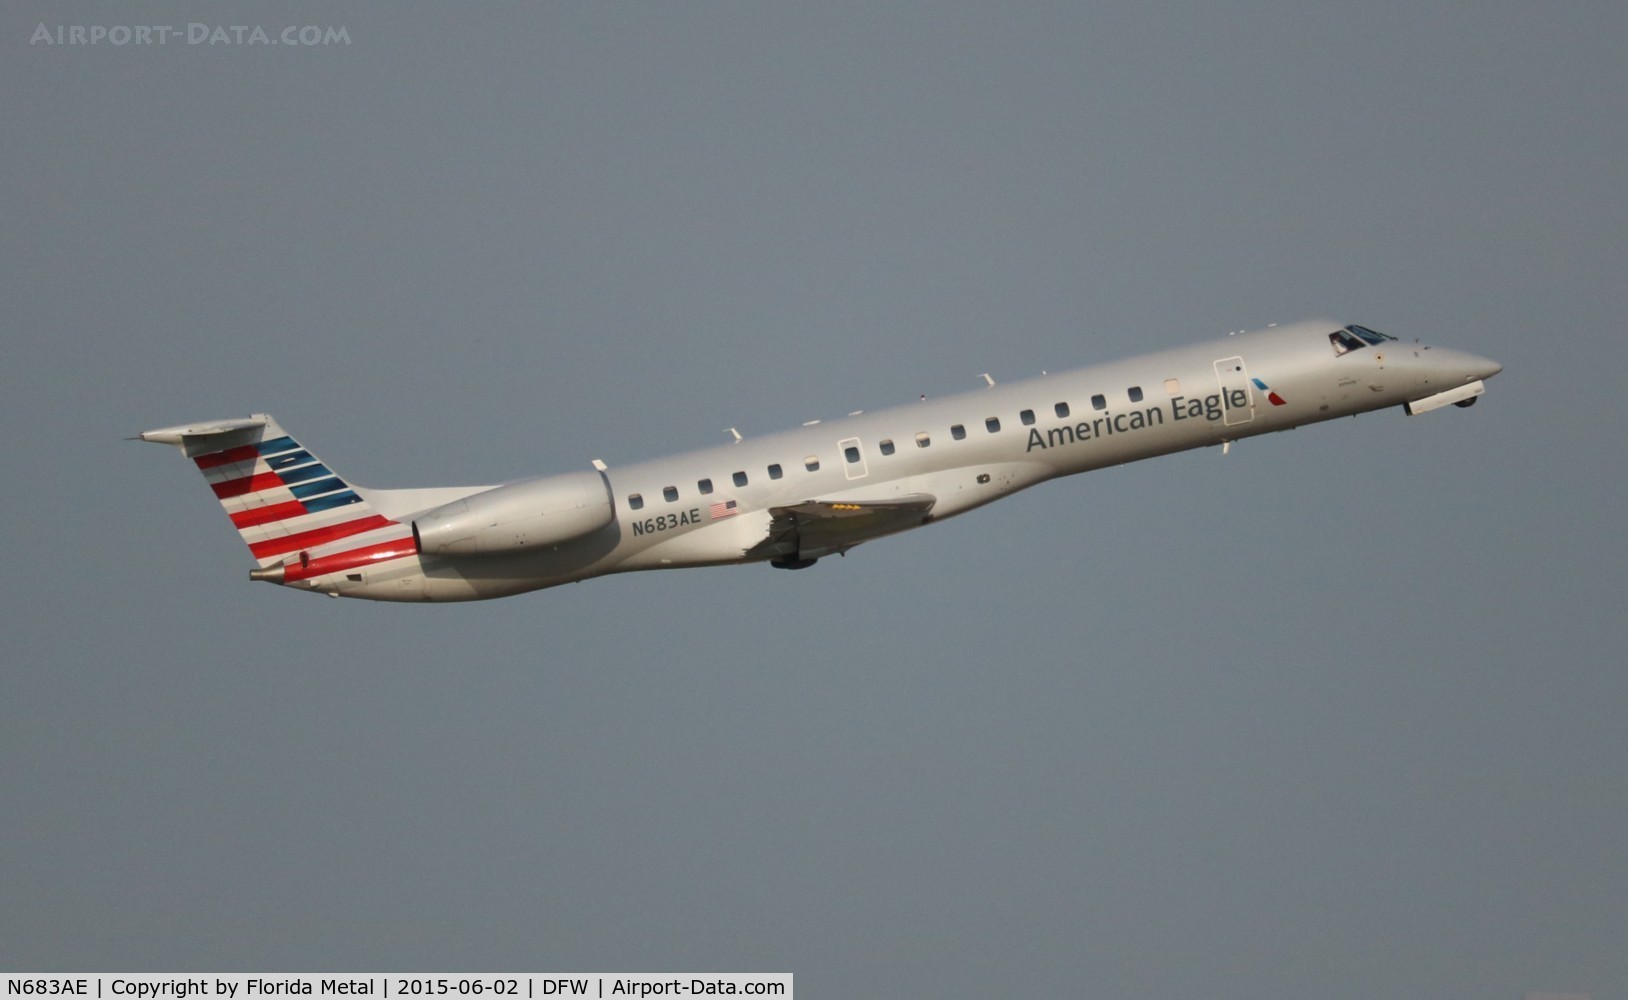 N683AE, 2004 Embraer ERJ-145LR (EMB-145LR) C/N 14500833, American Eagle